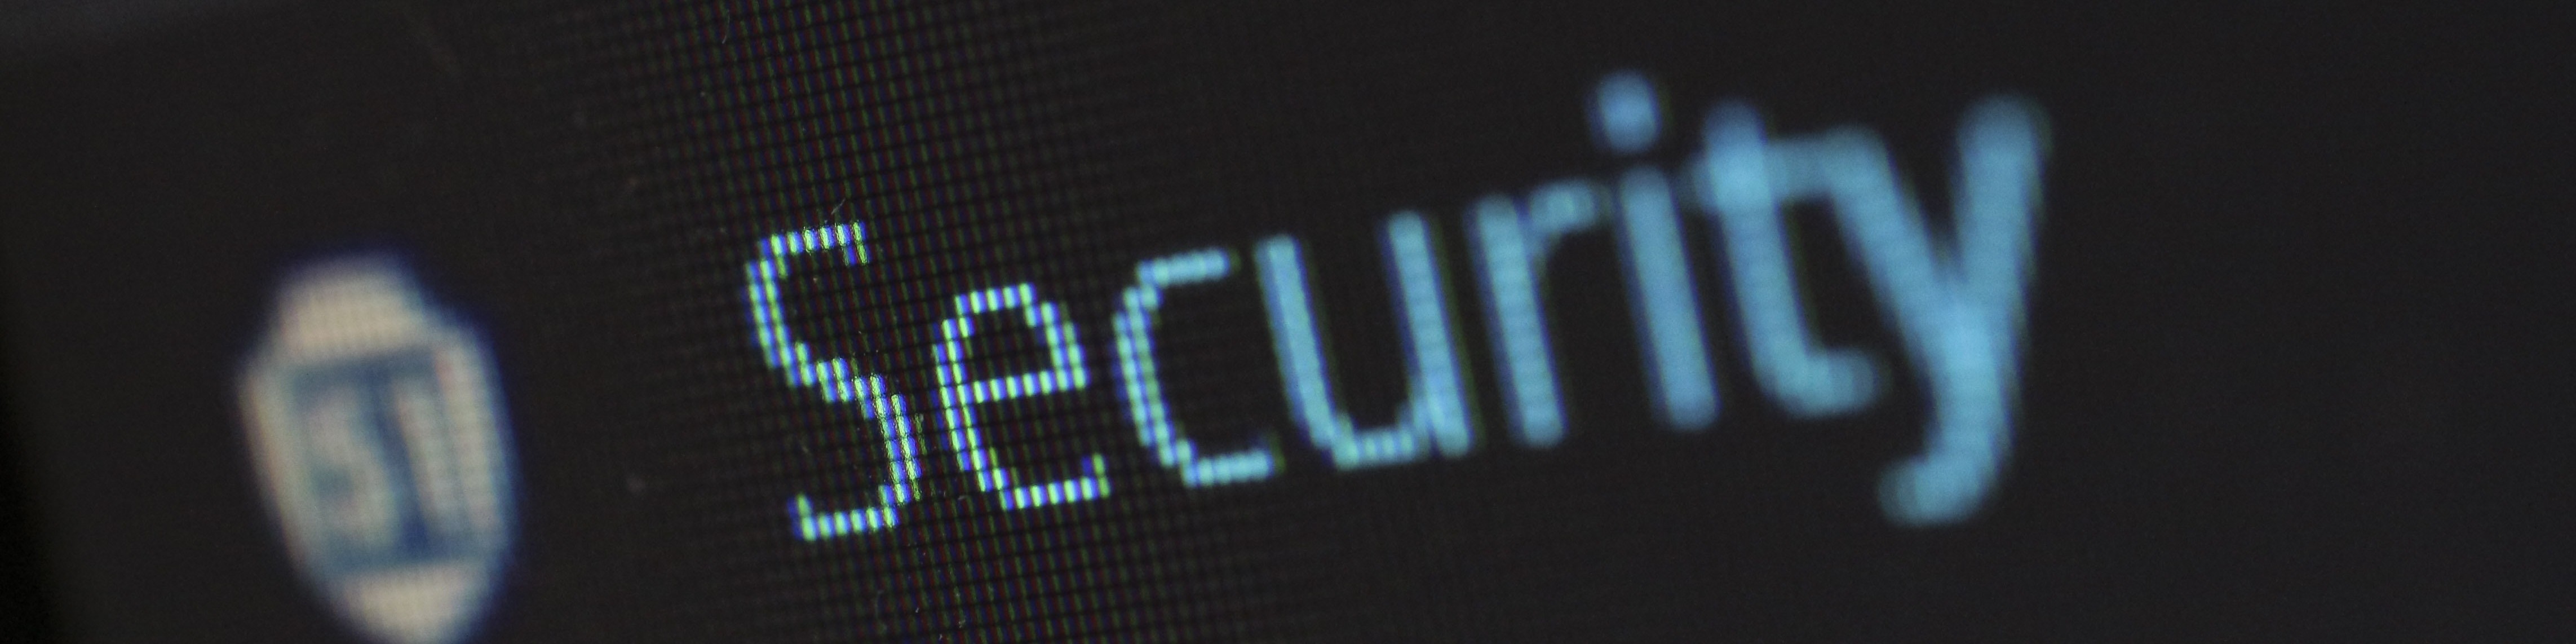 Security logo on computer screen